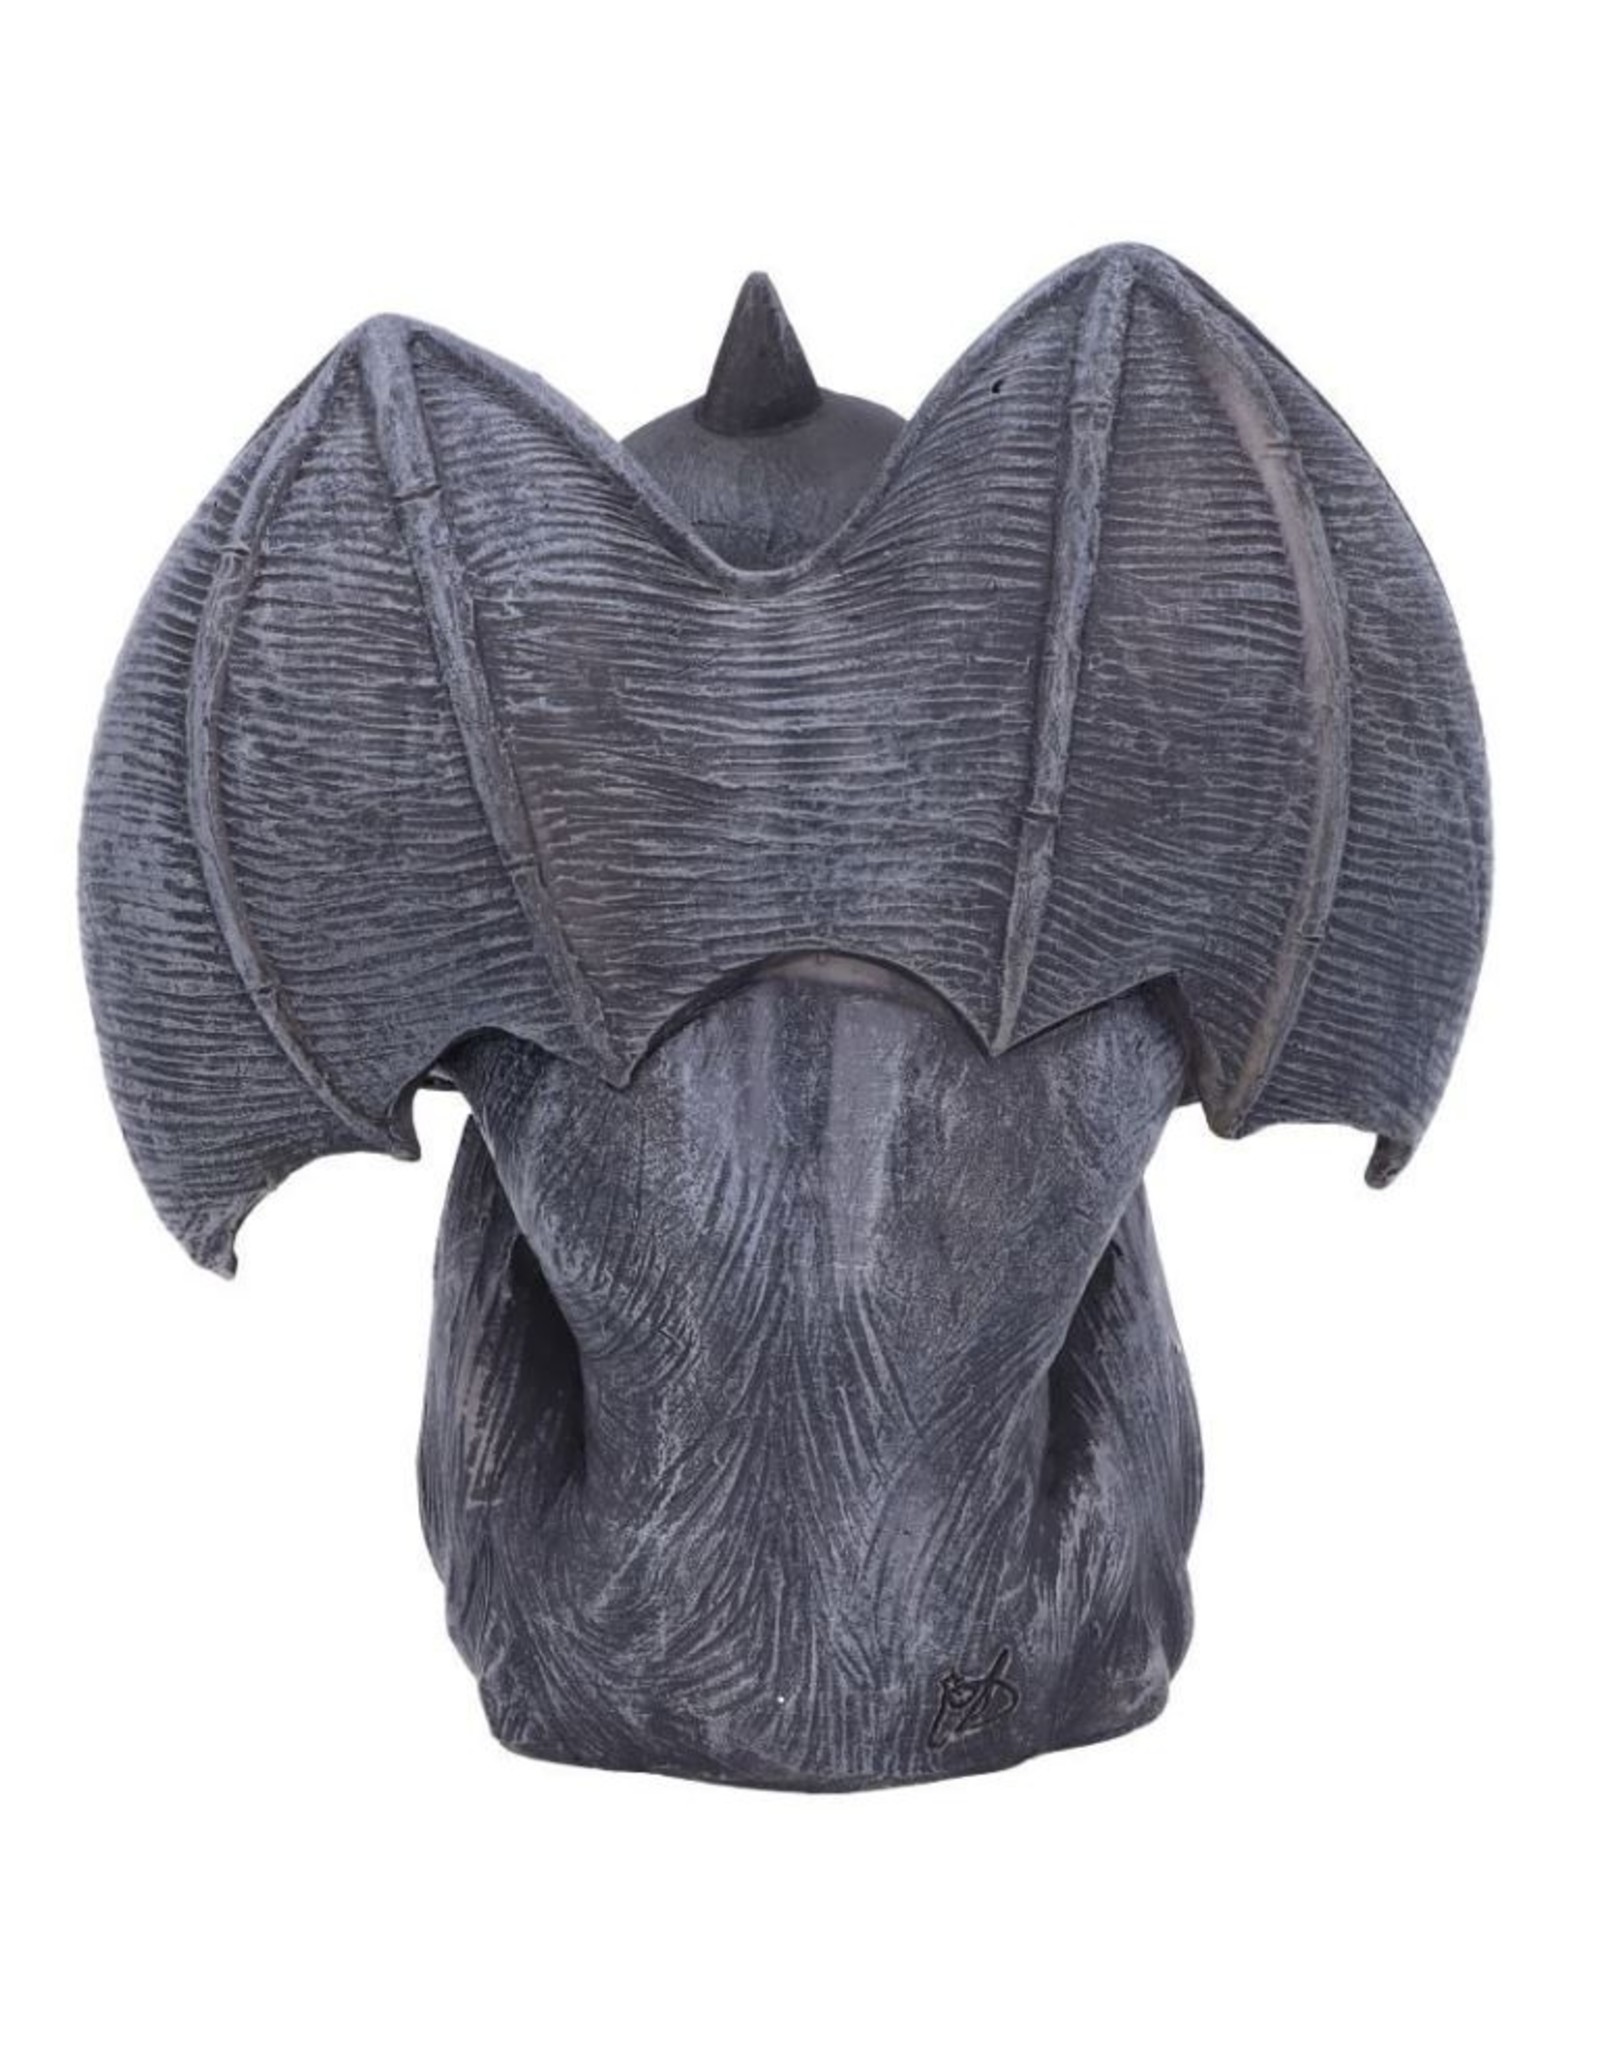 NemesisNow Giftware Figurines Collectables - Quasi Dark Grotesque Gargoyle Figurine 12.5cm